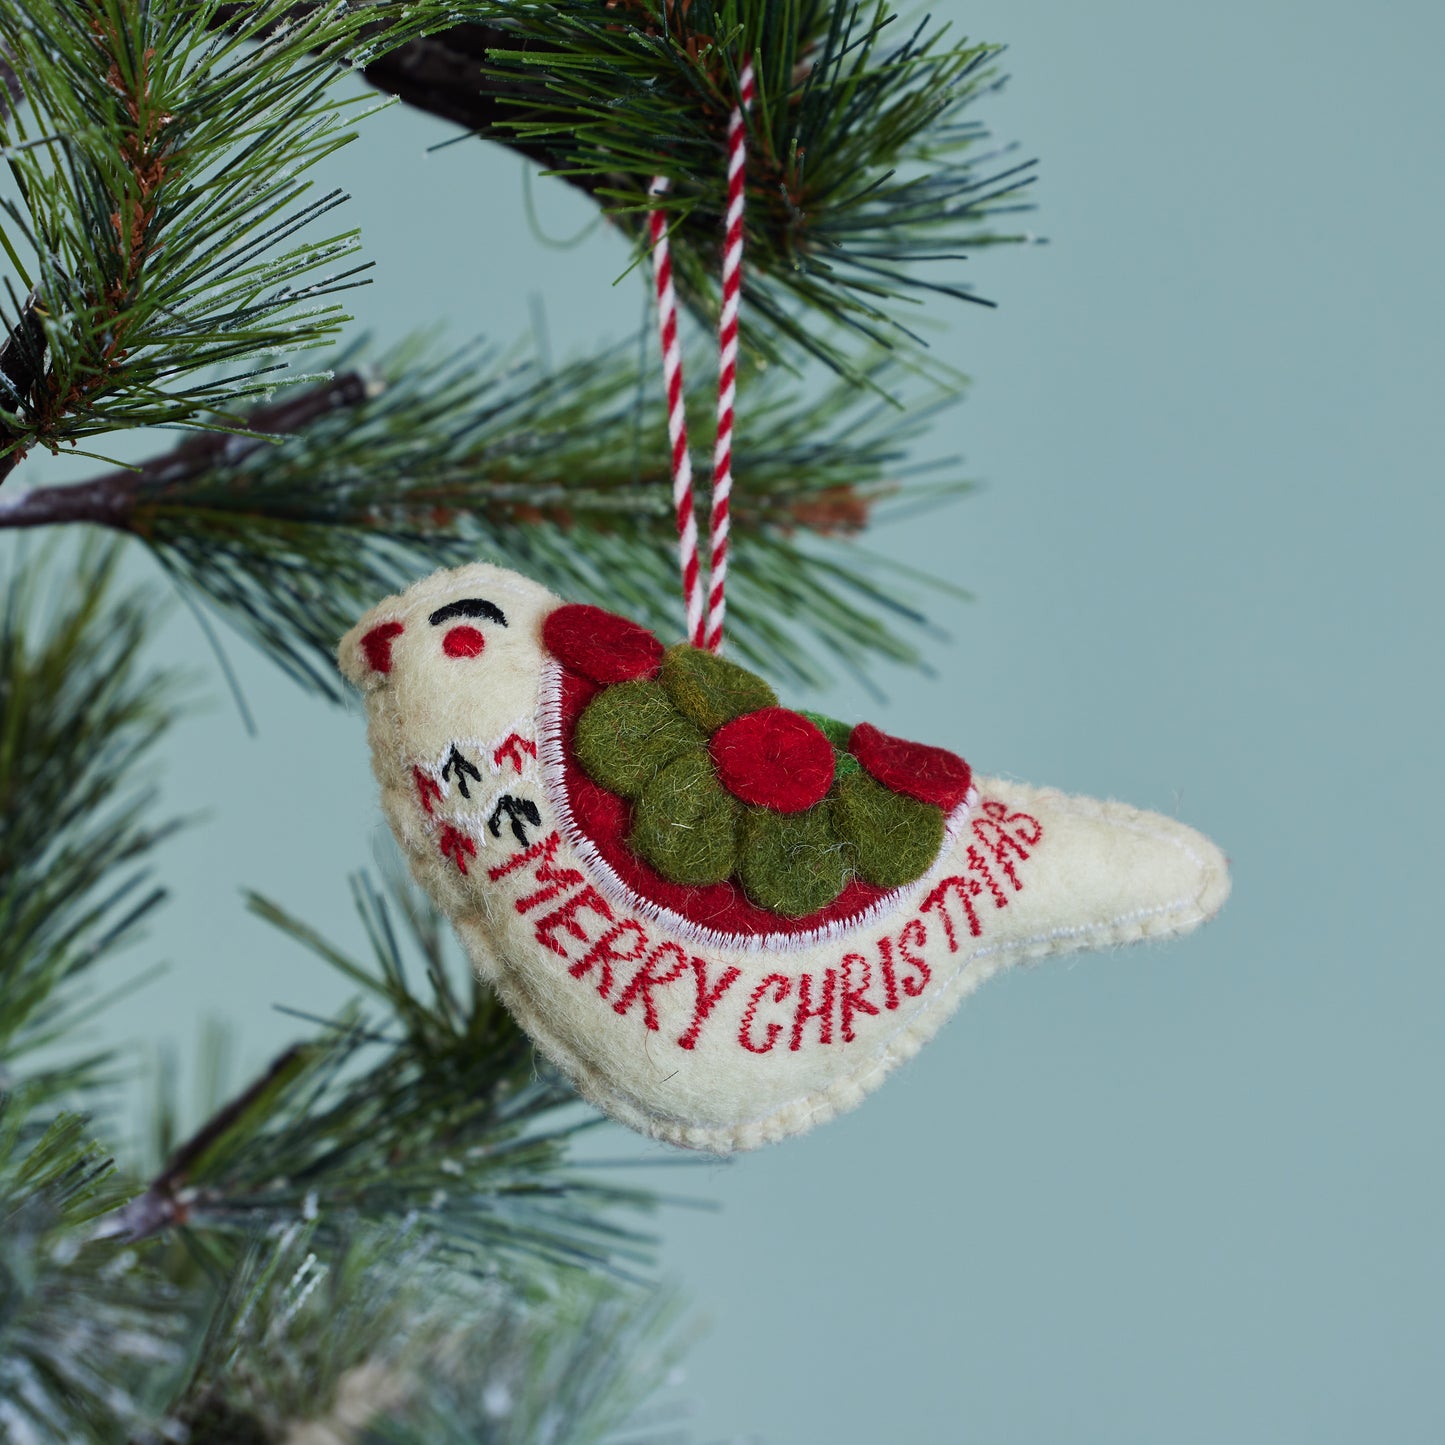 Felt Animal Ornament with Holiday Saying